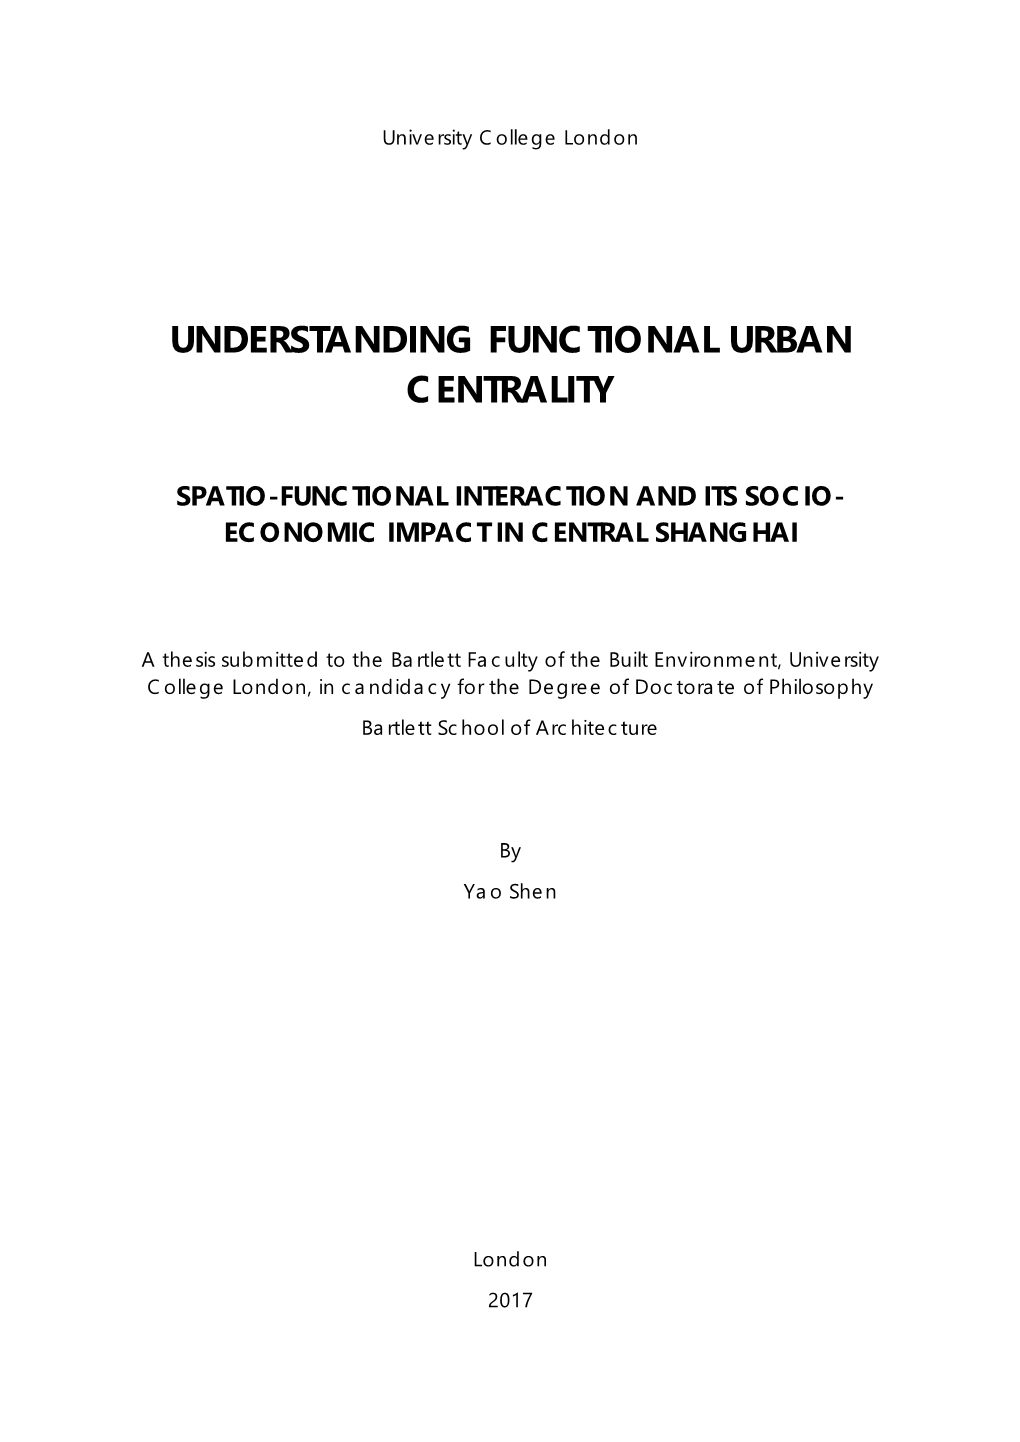 Understanding Functional Urban Centrality